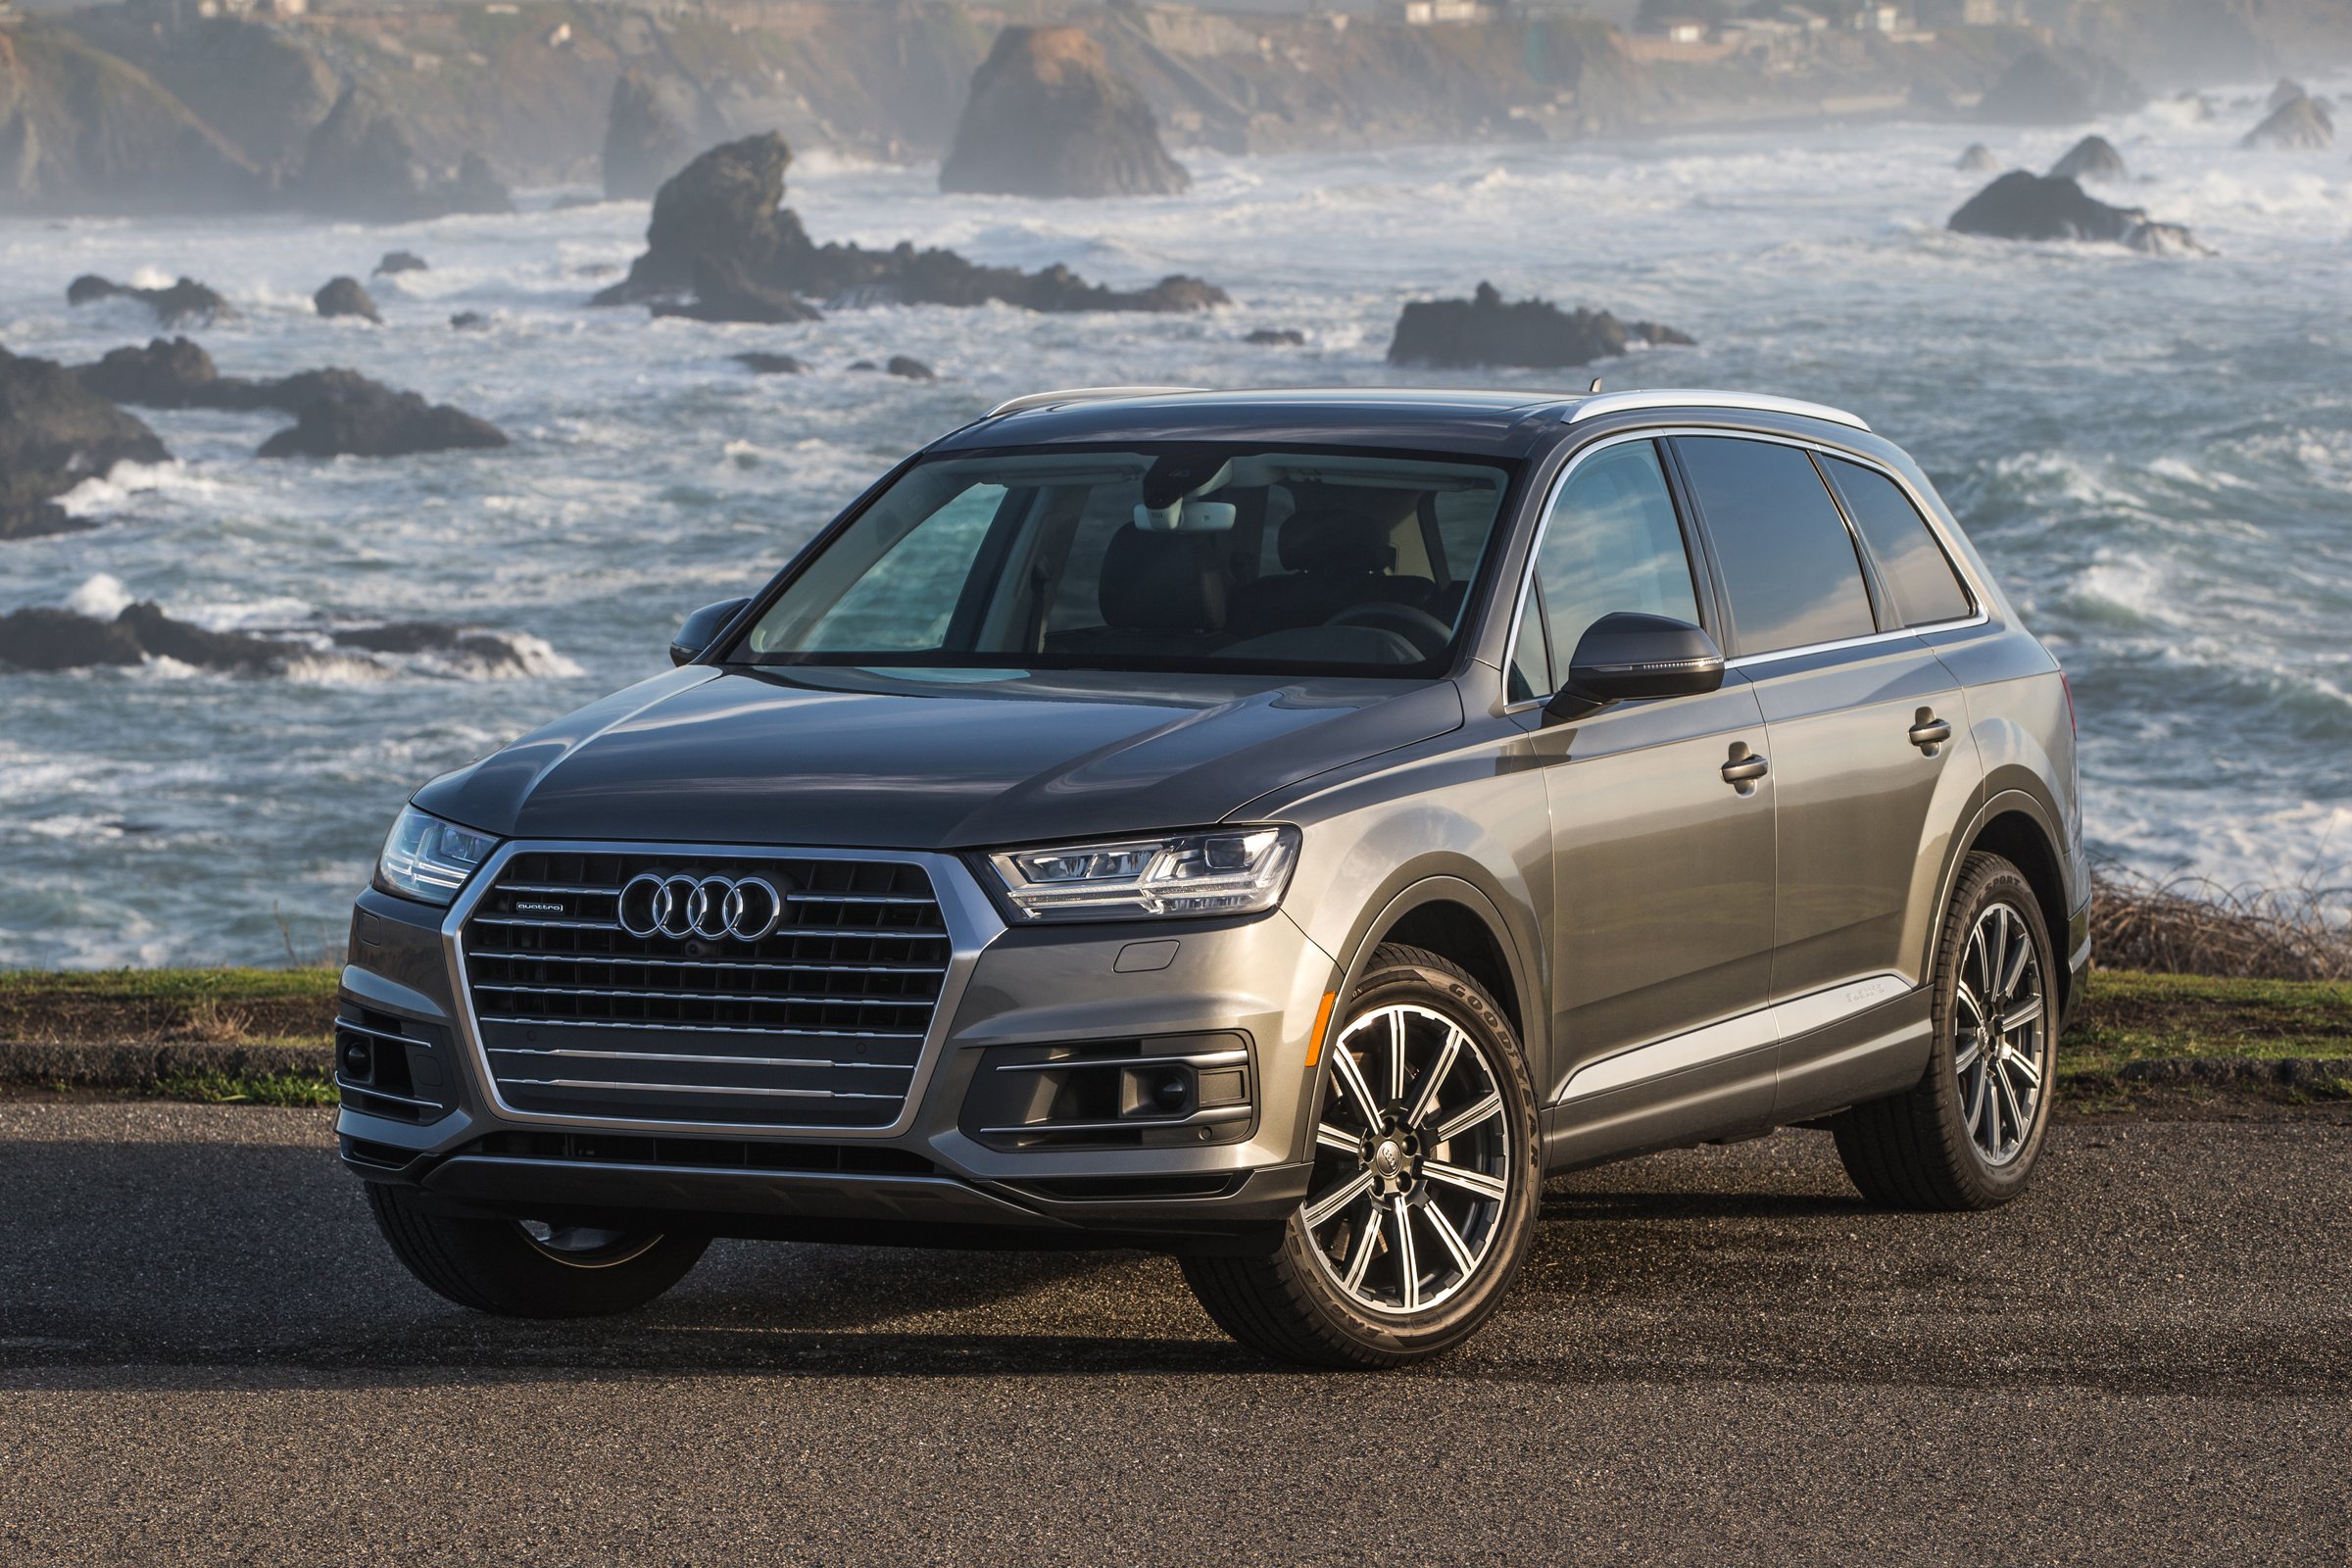 Audi to Focus More on SUVs